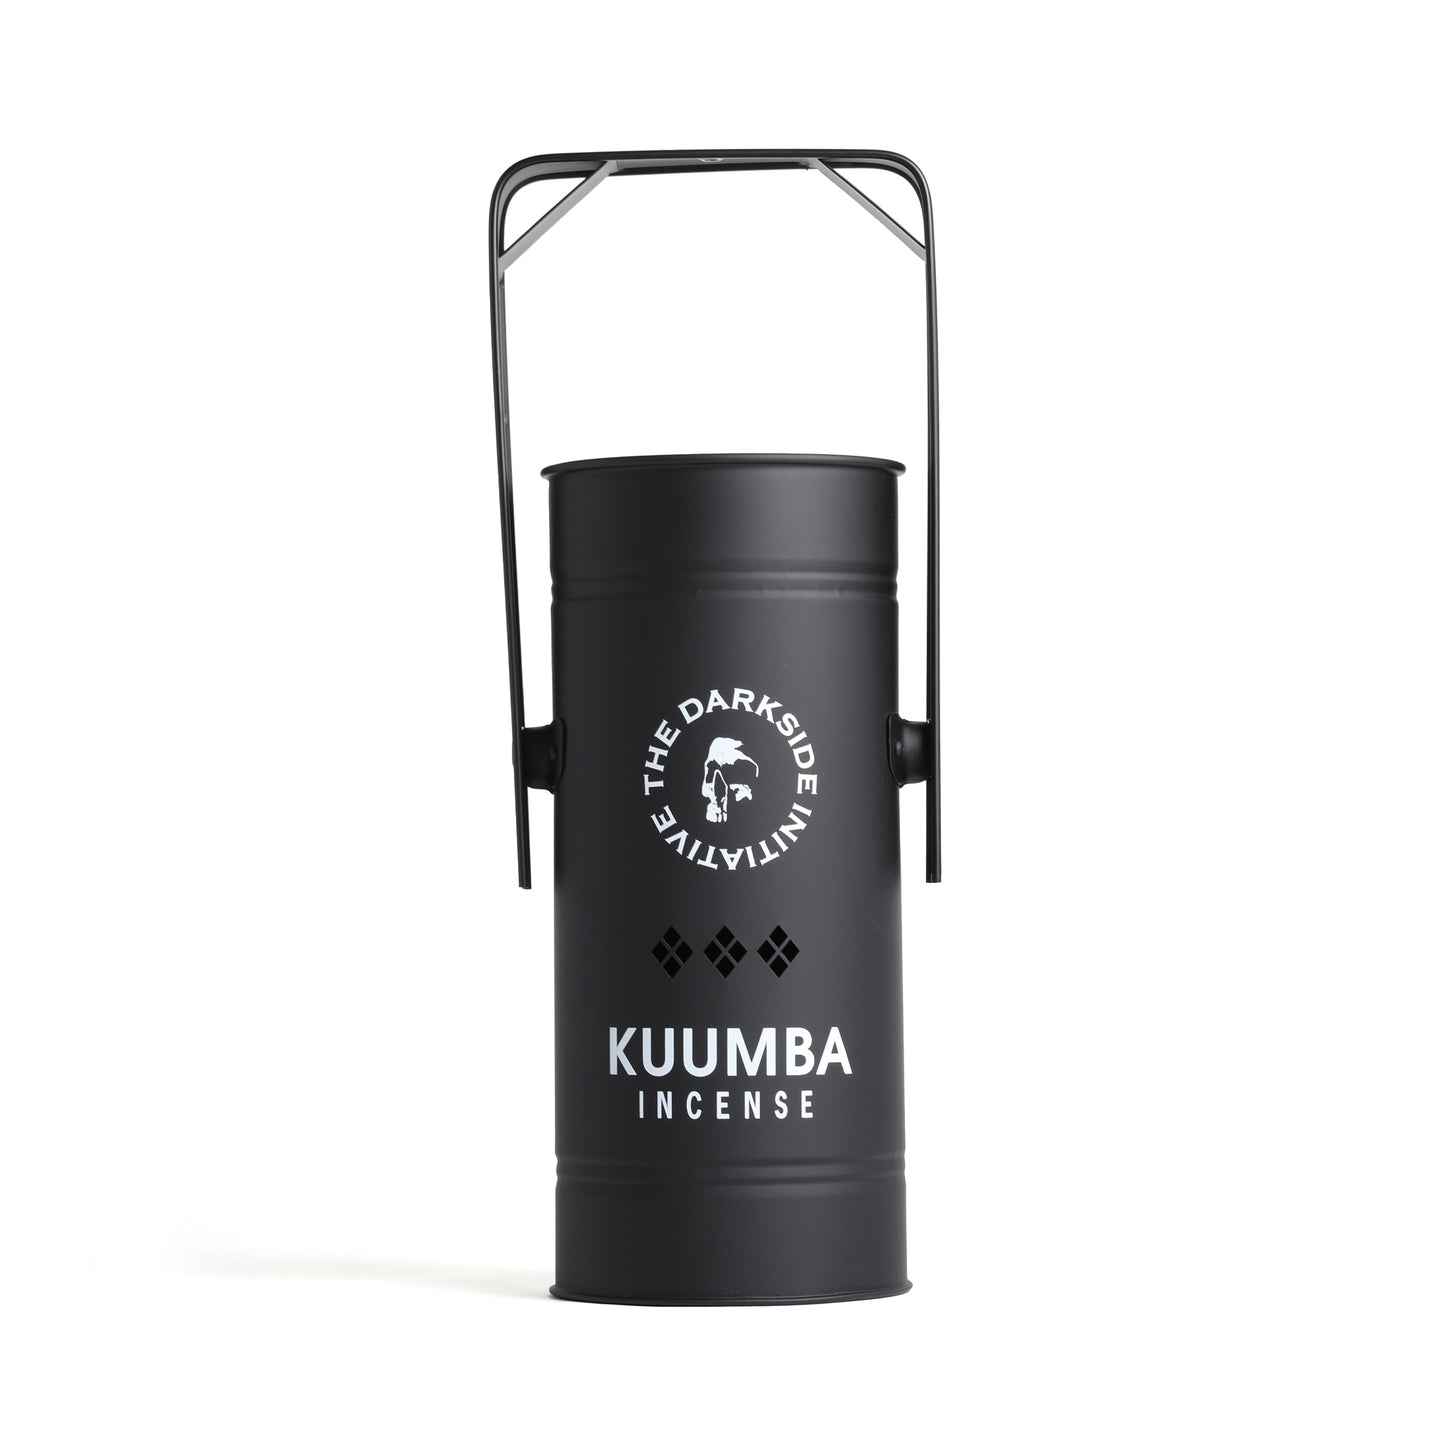 The Darkside Initiative x Kuumba International Metal Can Incense Burner